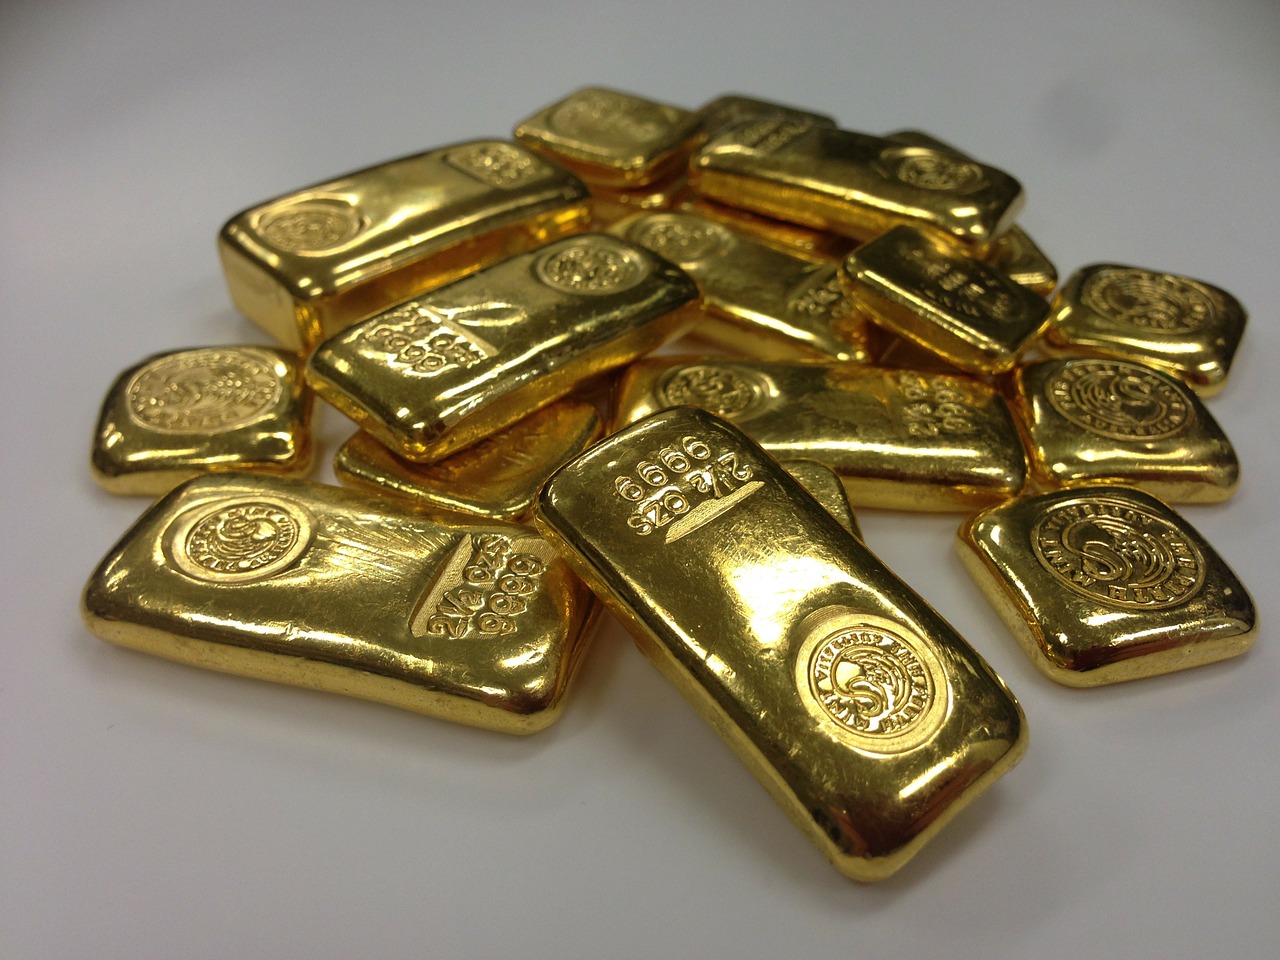 Gold,bar,gold bar,gold bullion,bar of gold - free image from needpix.com